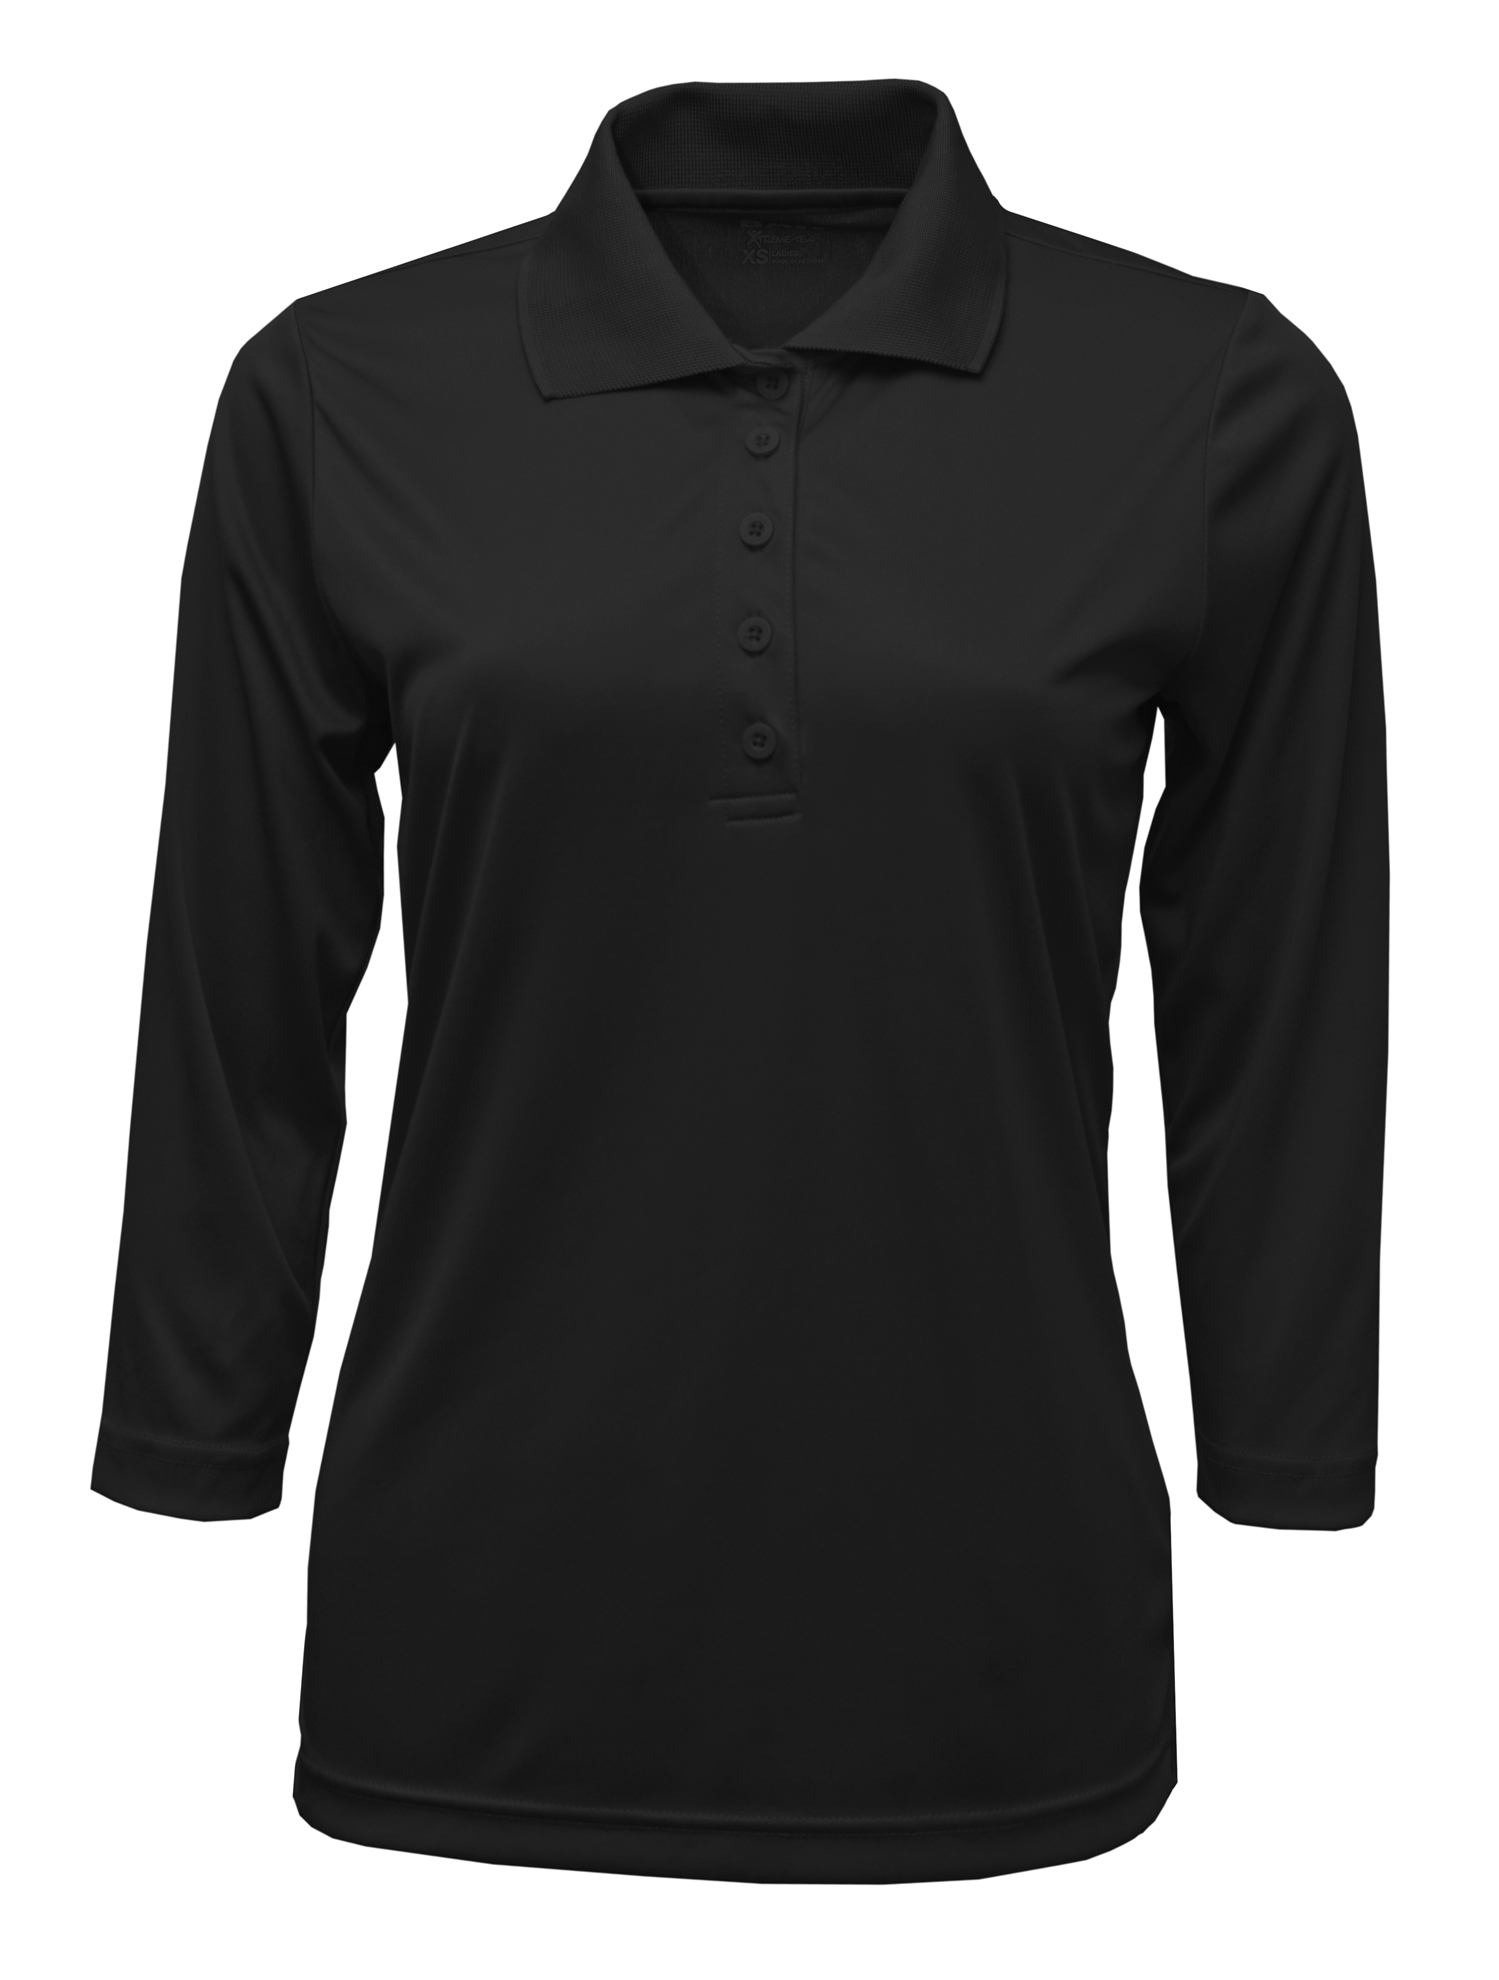 BAW Athletic Wear XT49 - Ladies Xtreme-Tek 3/4 Sleeve Polo